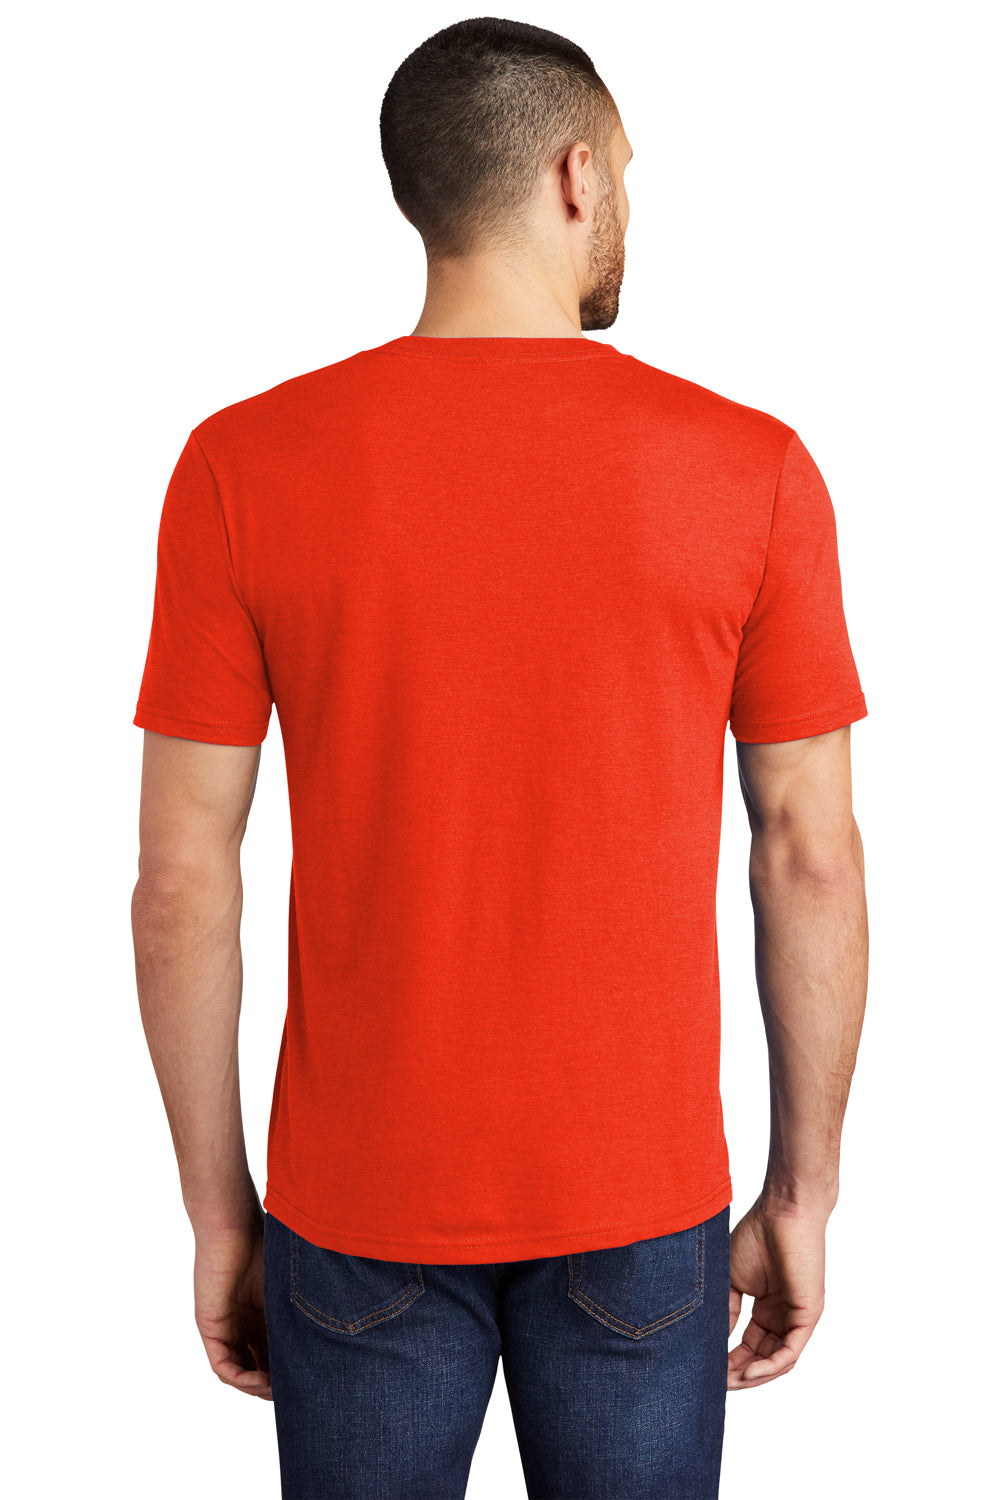 District DM130 Mens Perfect Tri Short Sleeve Crewneck T-Shirt Heather Deep Orange Back